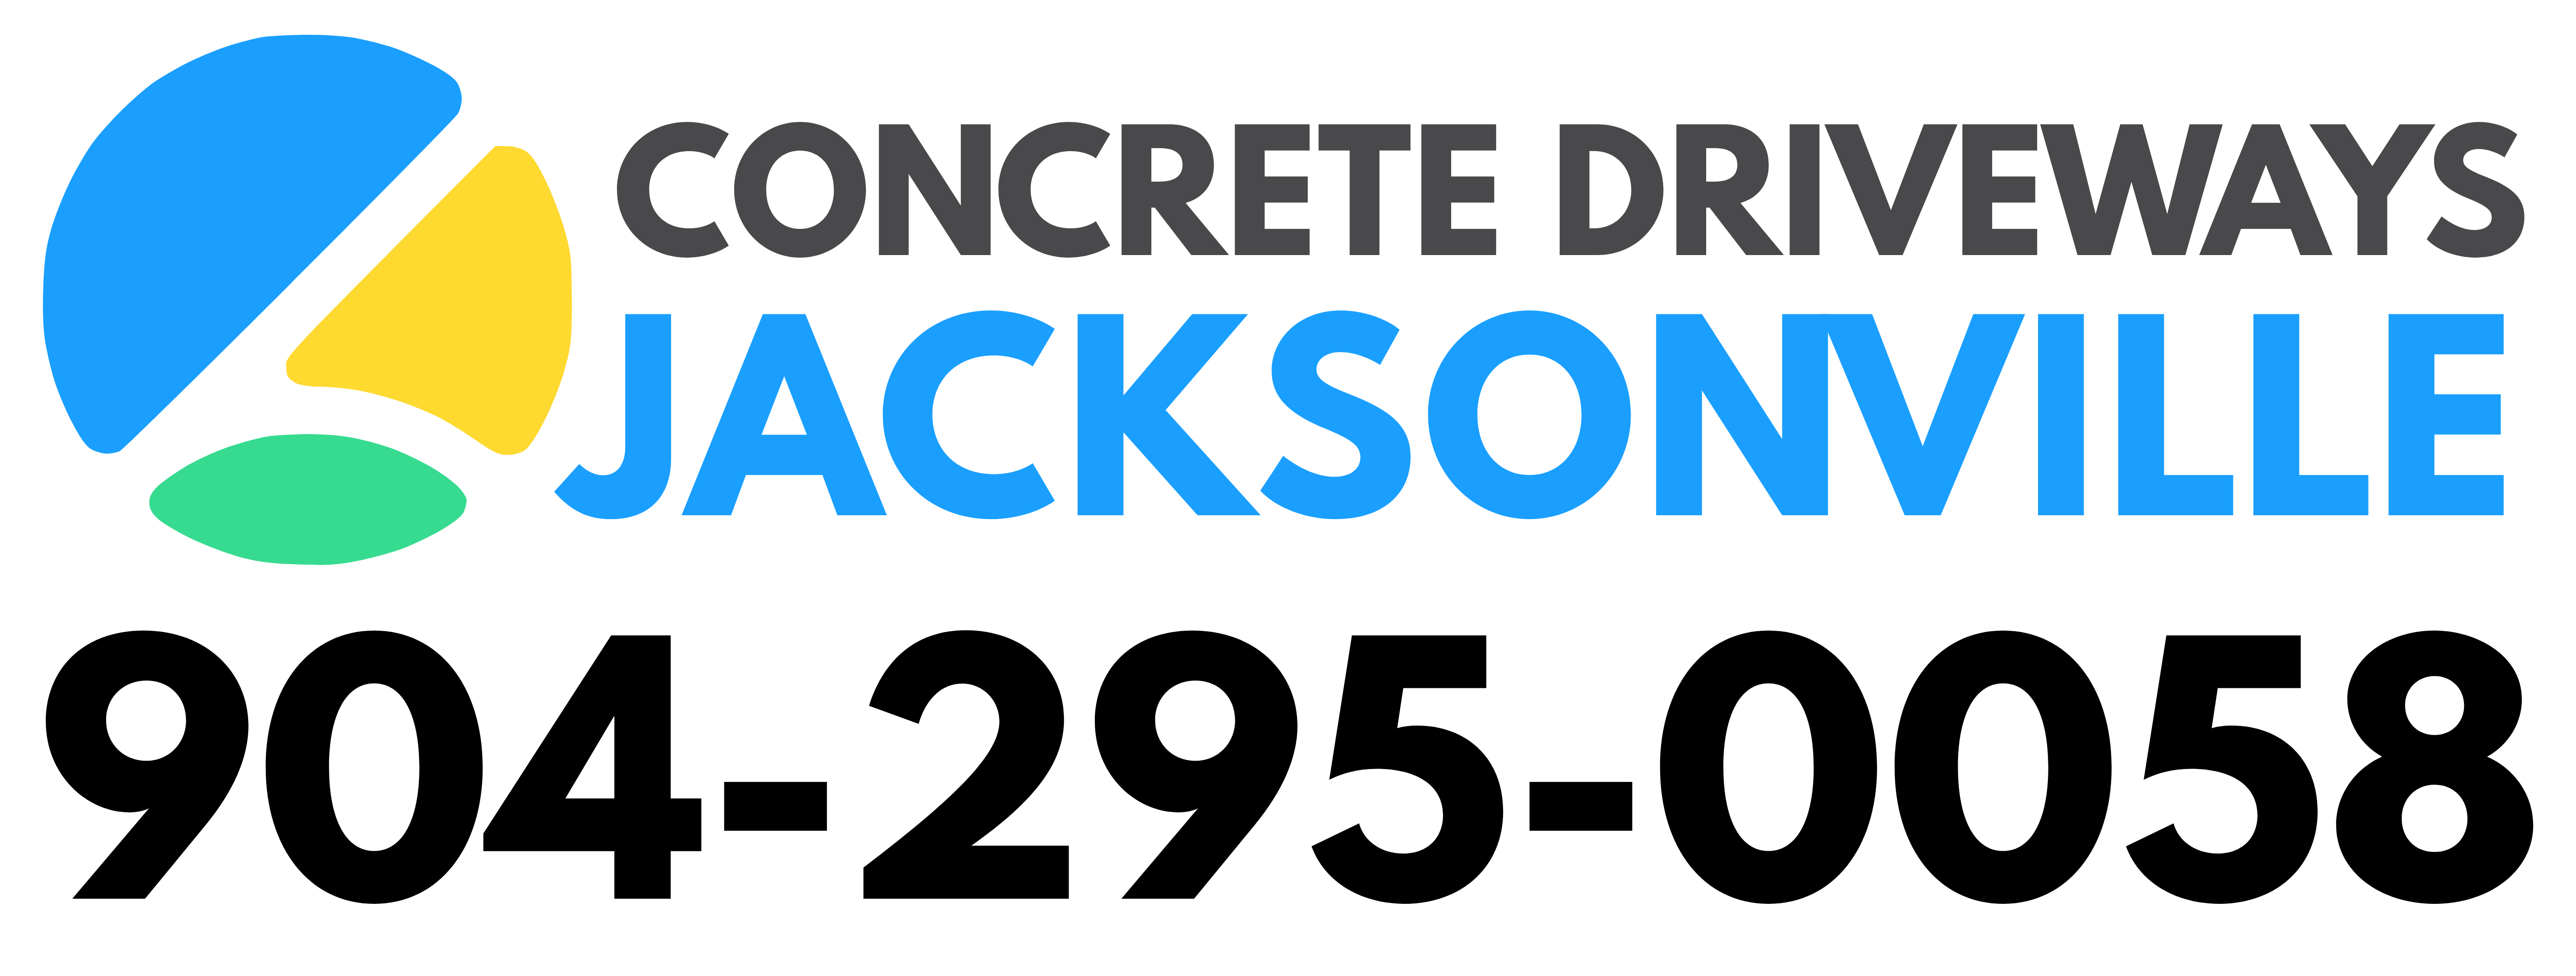 concrete driveway jacksonville transparent updated